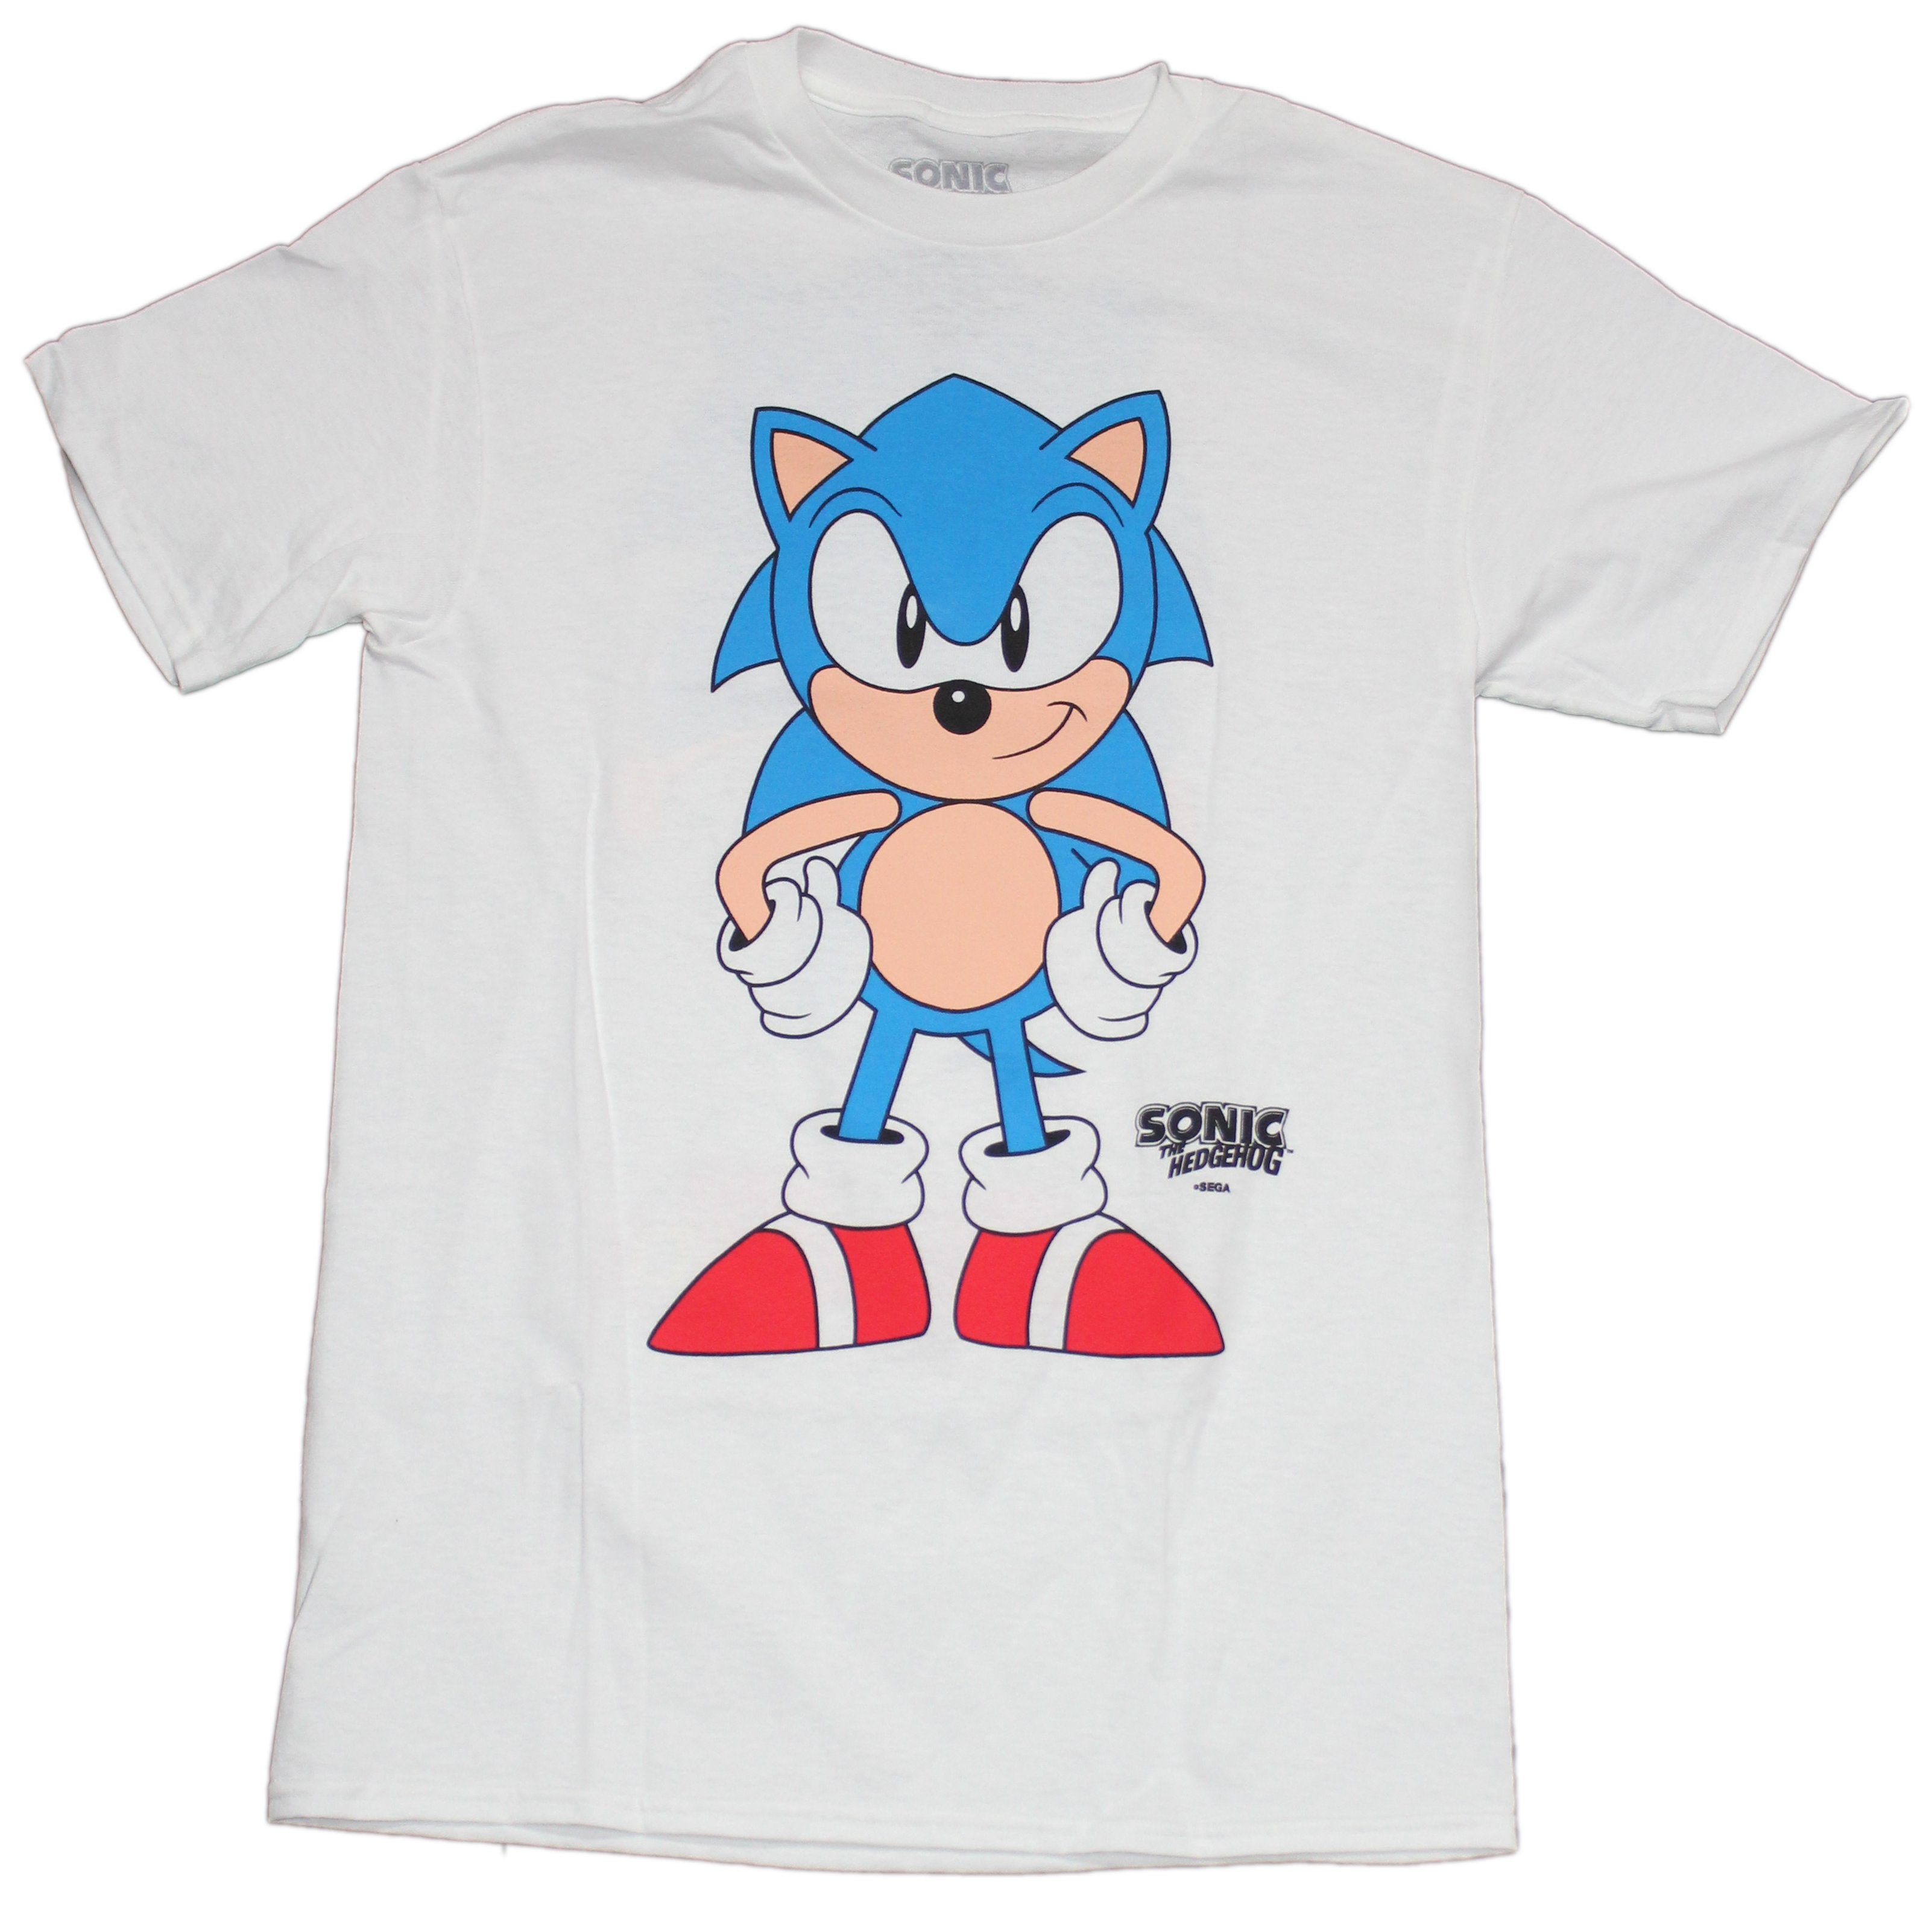 Sonic the Hedgehog Mens T-Shirt - Hands on Hips